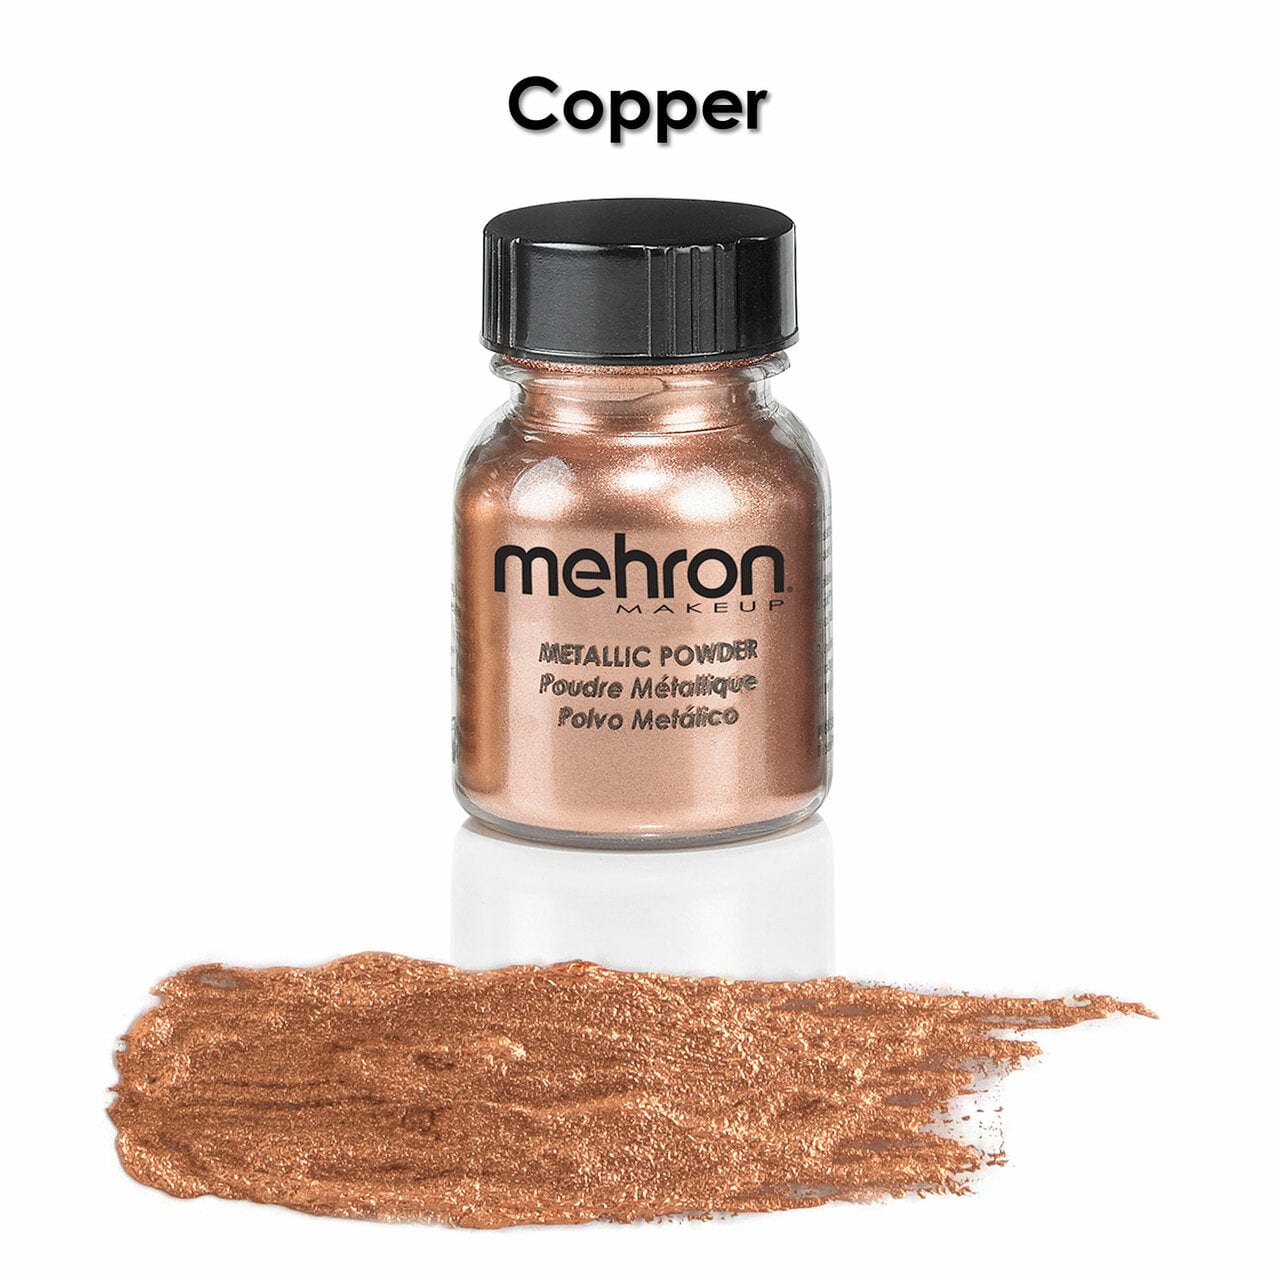 Mehron Metallic Powder - cooper - Mehron